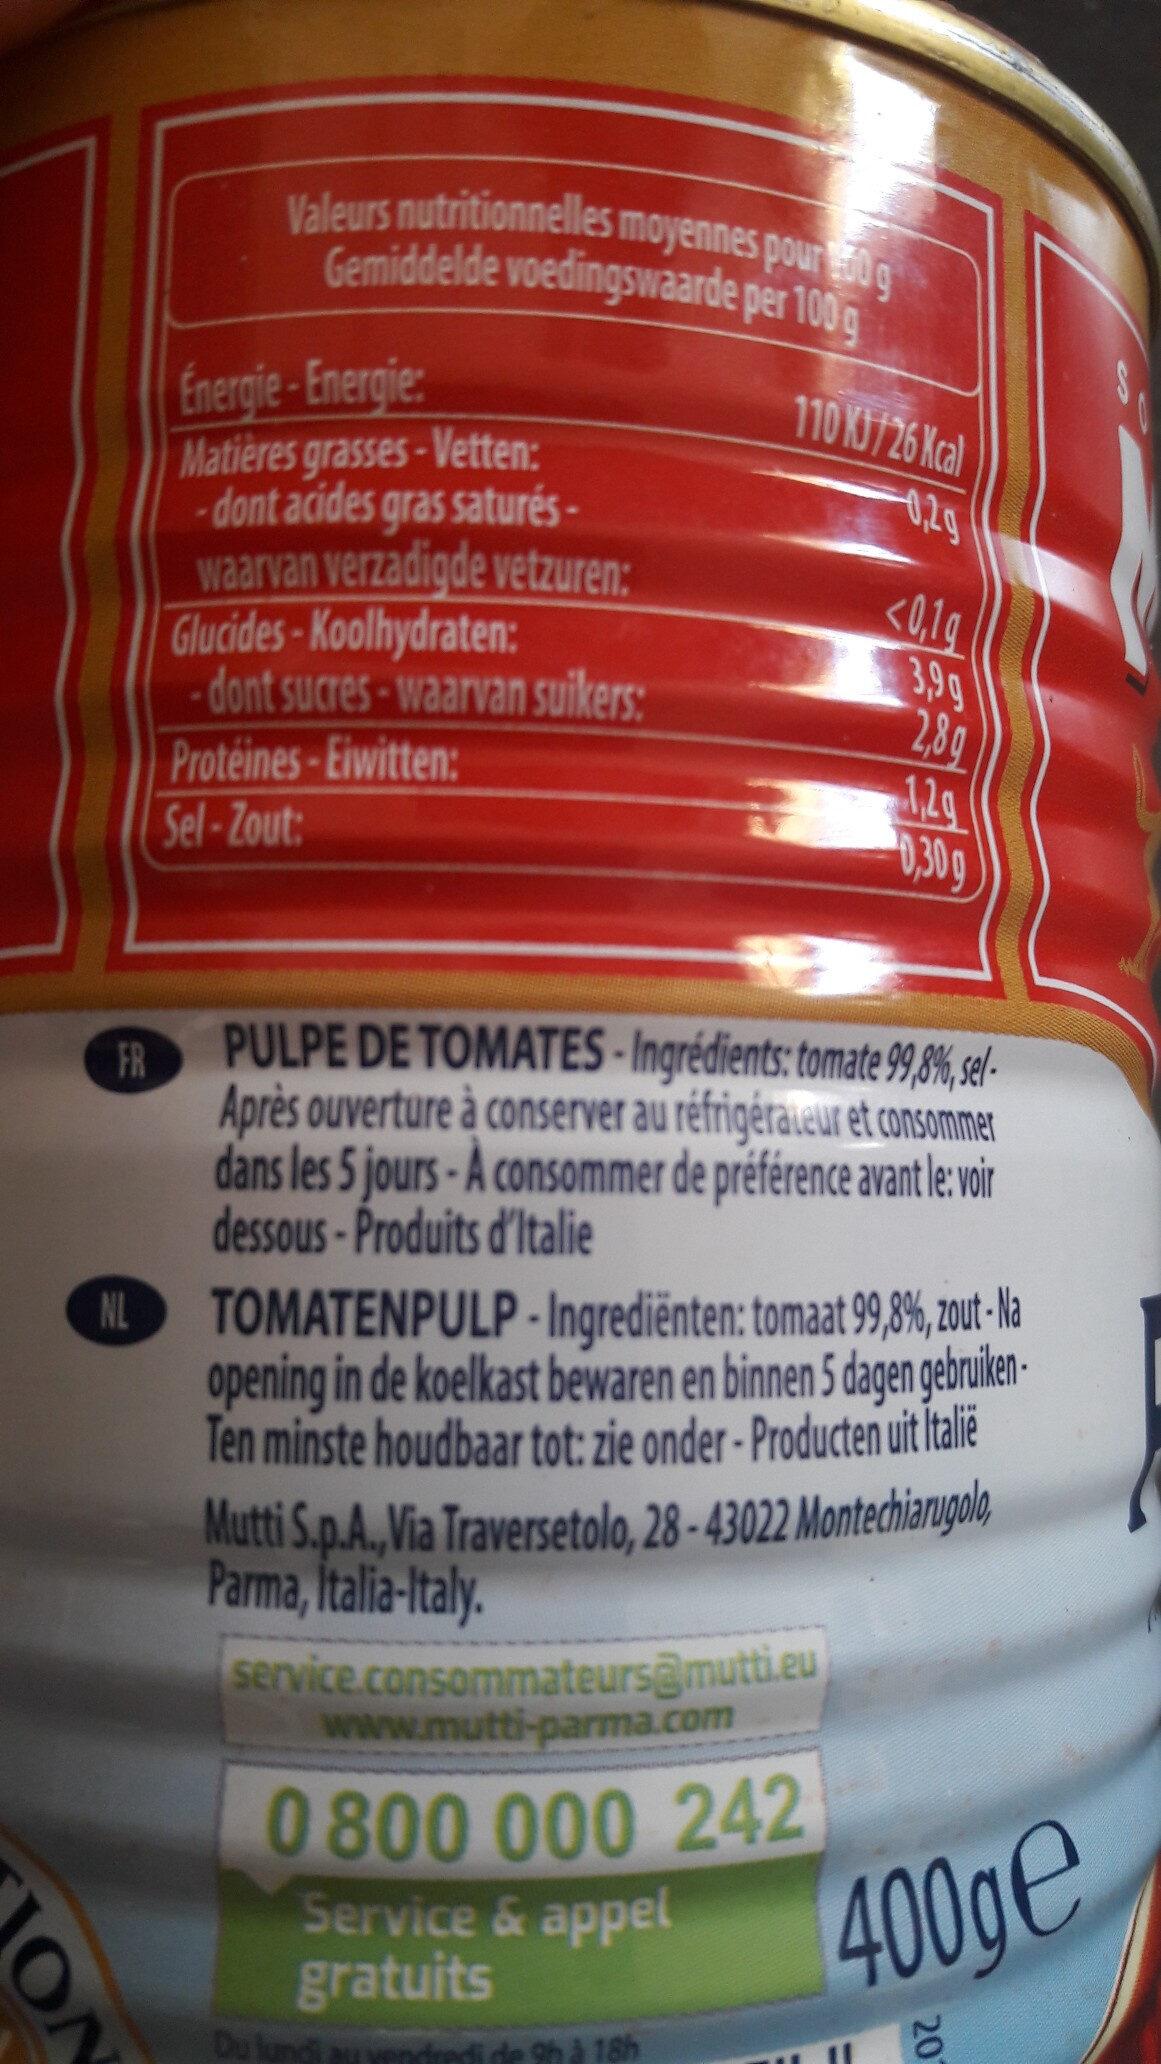 Polpa tomatenfruchtfleisch - Nutrition facts - fr